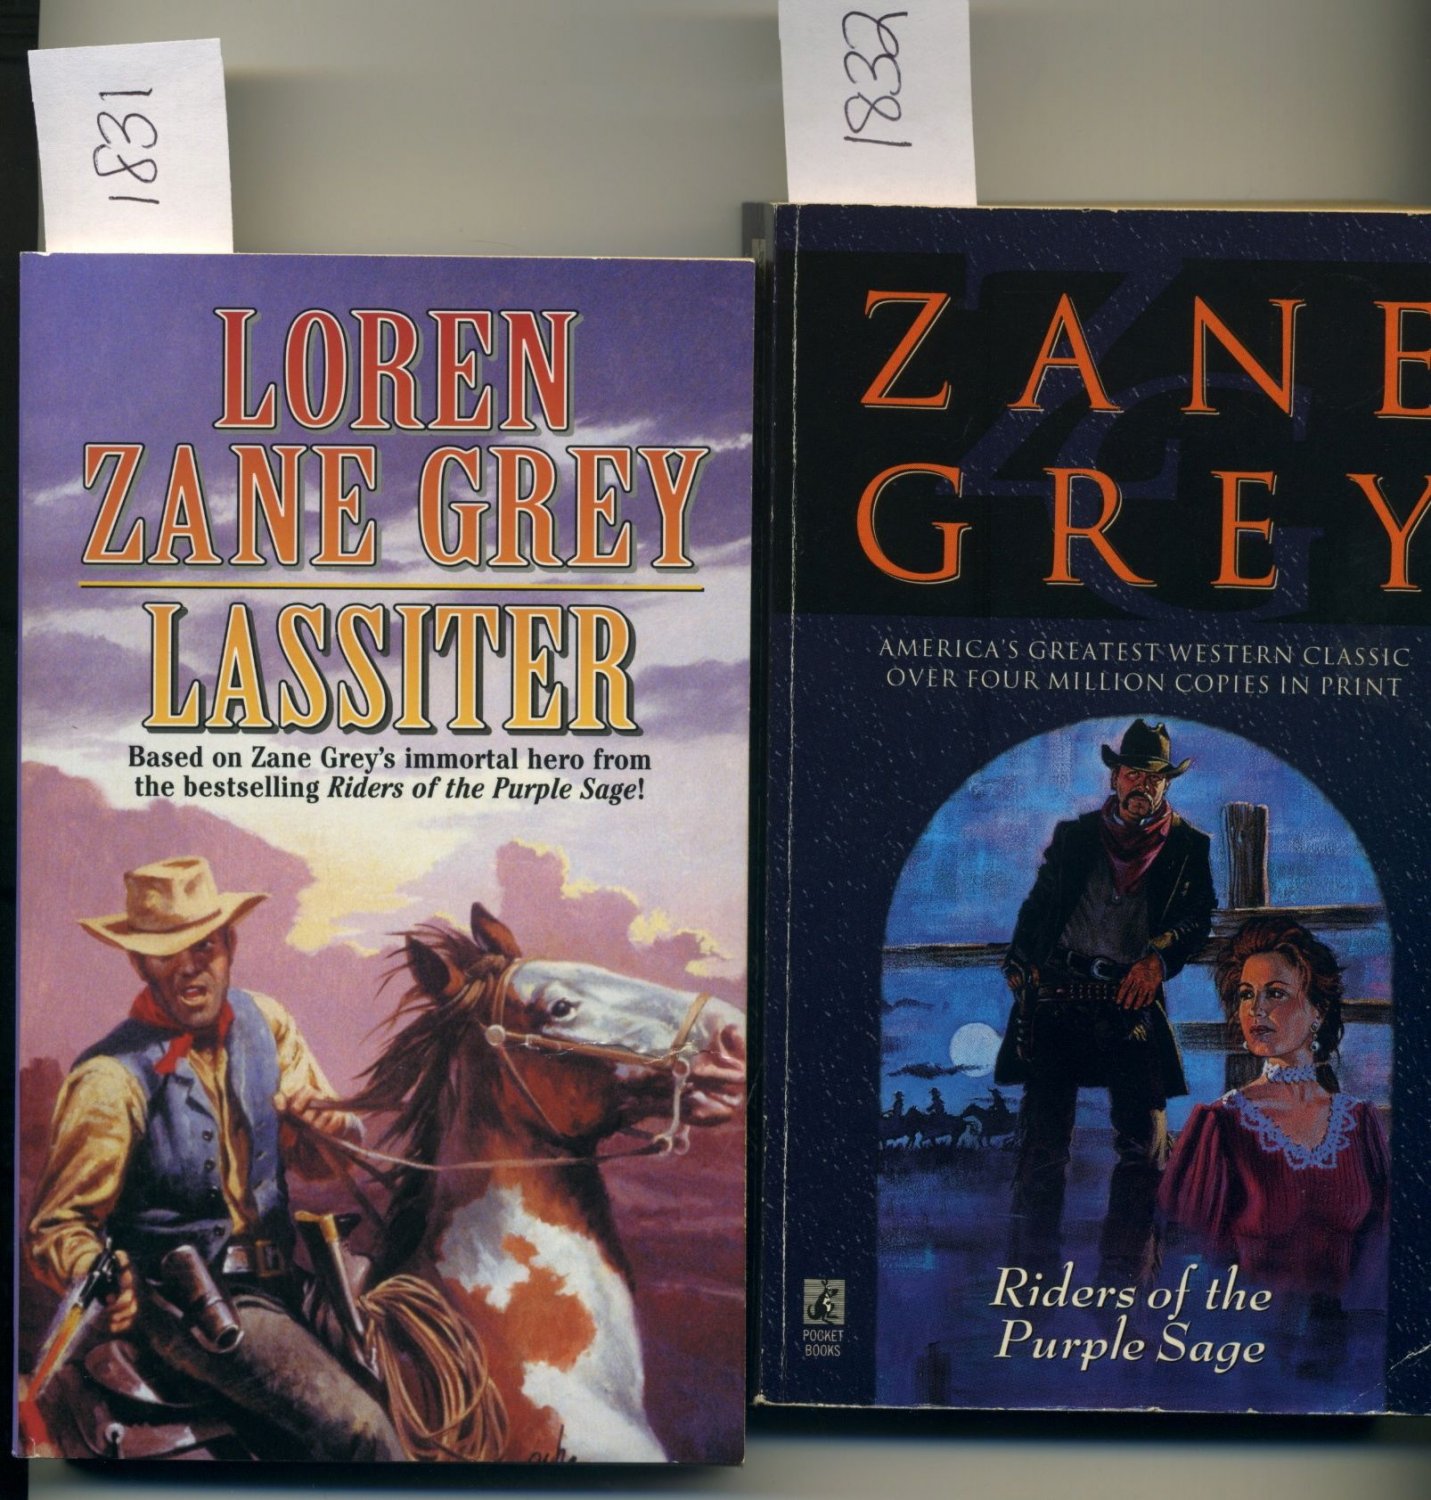 Riders of the Purple Sage by Zane Grey